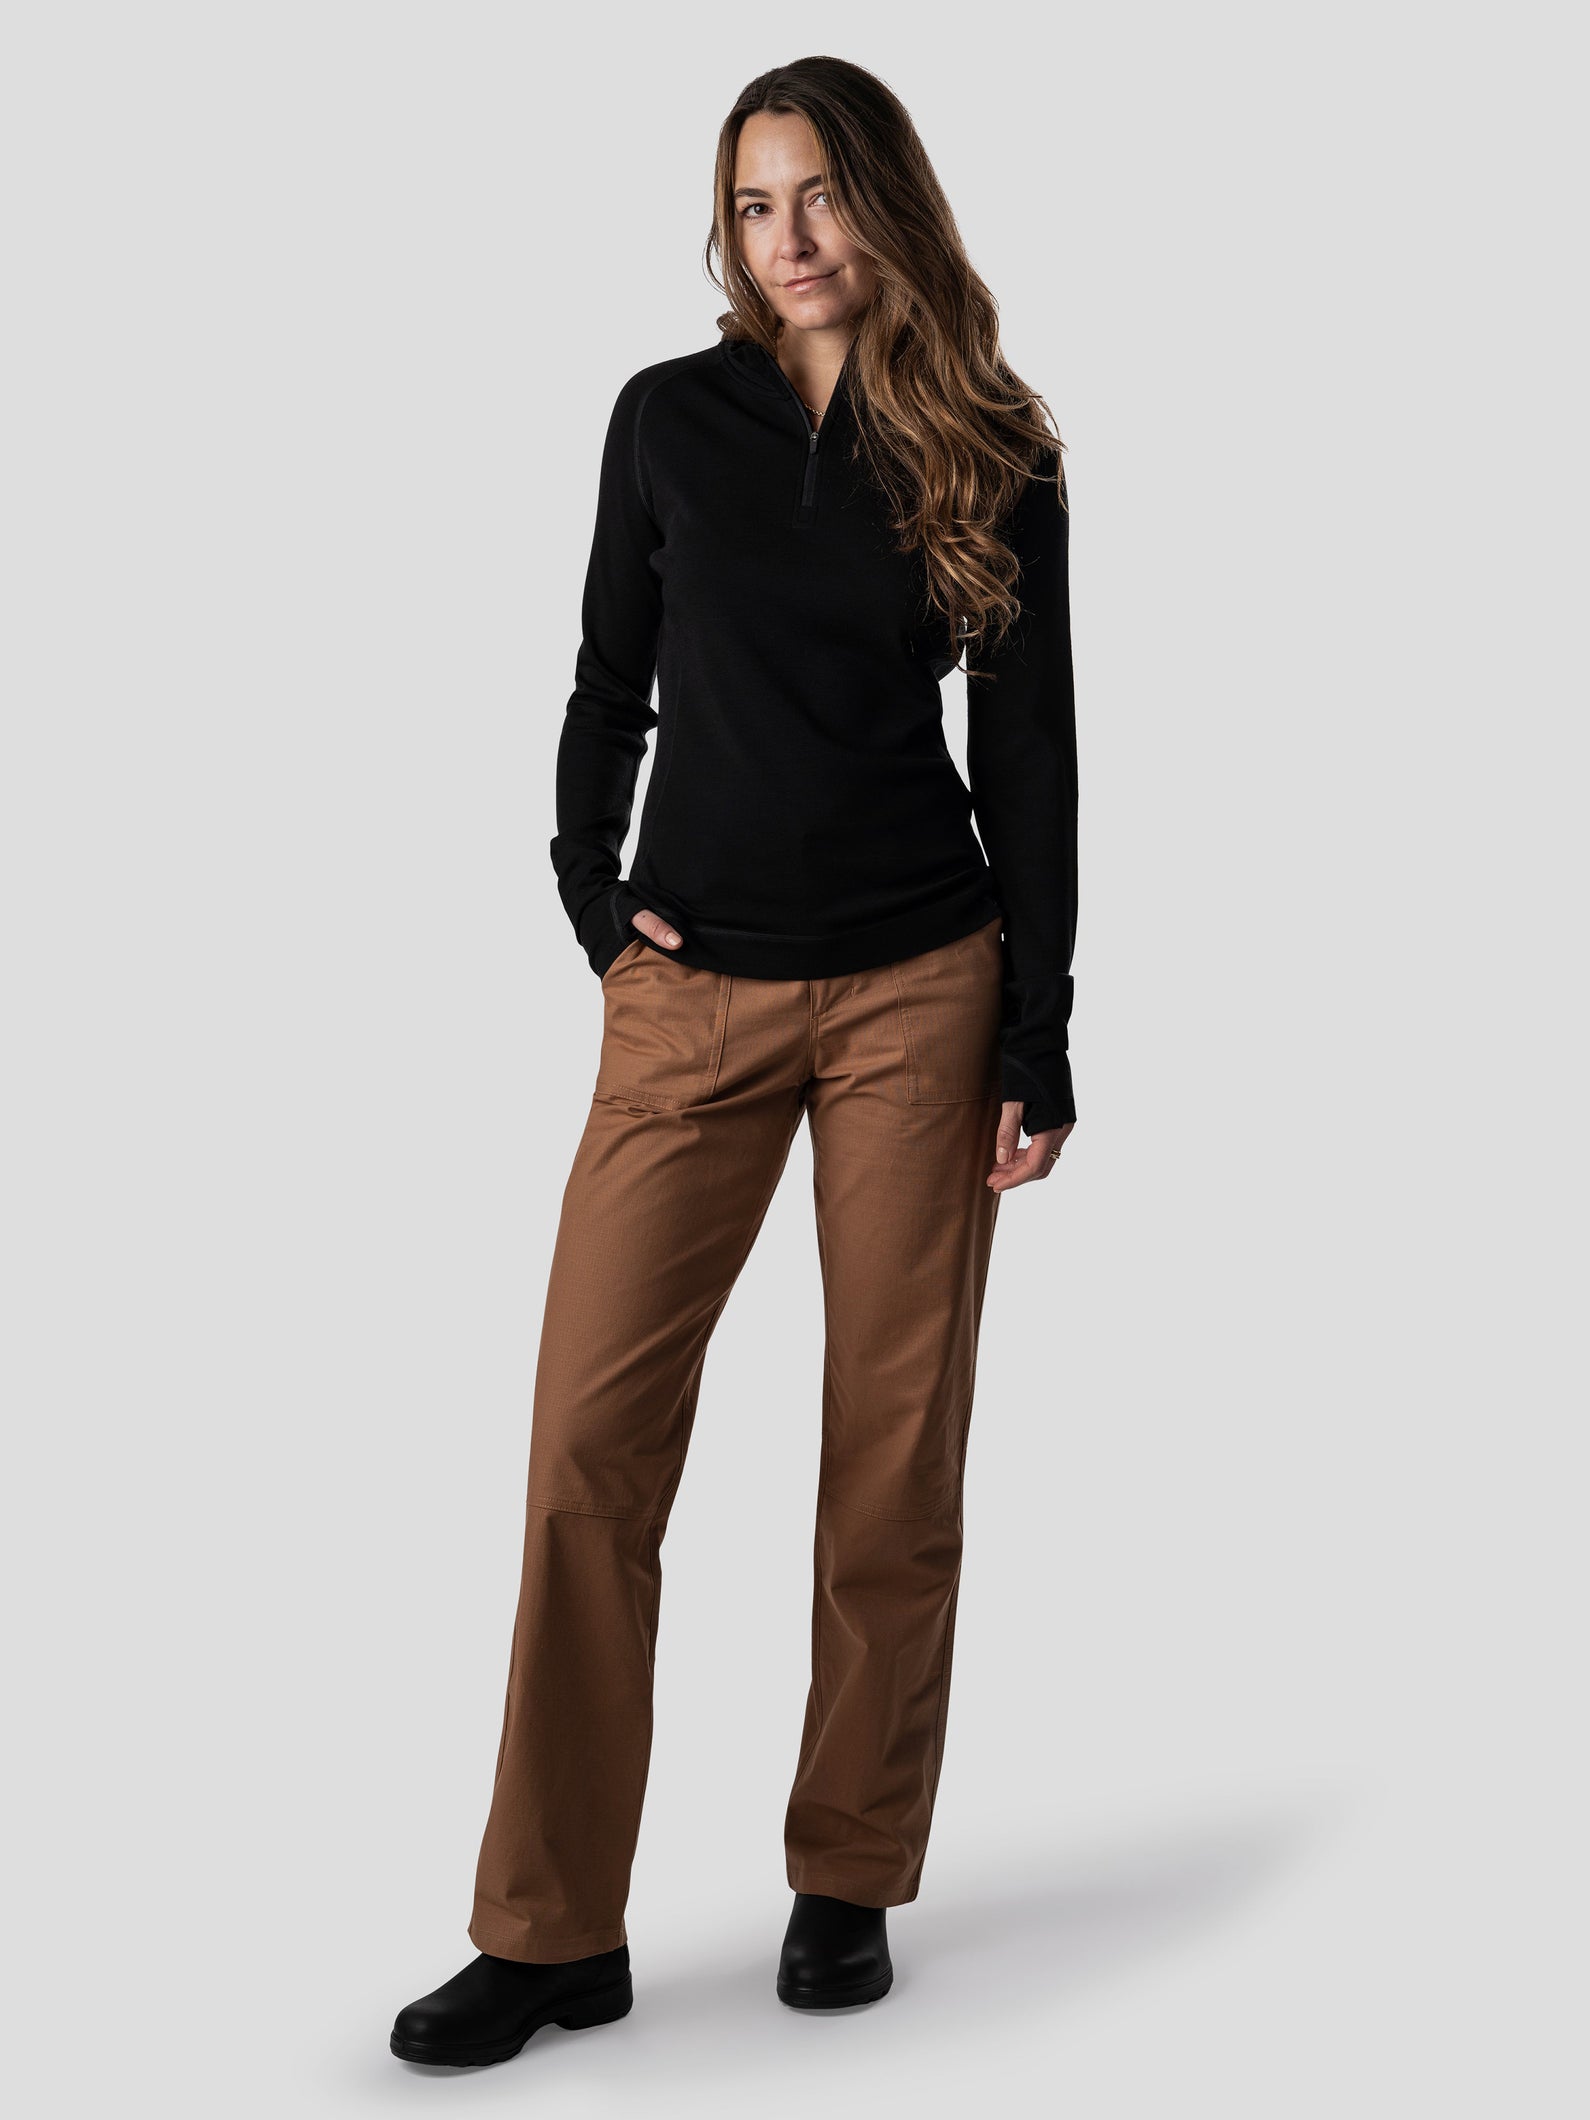 Women's Gruene Pants - Pintail Brown